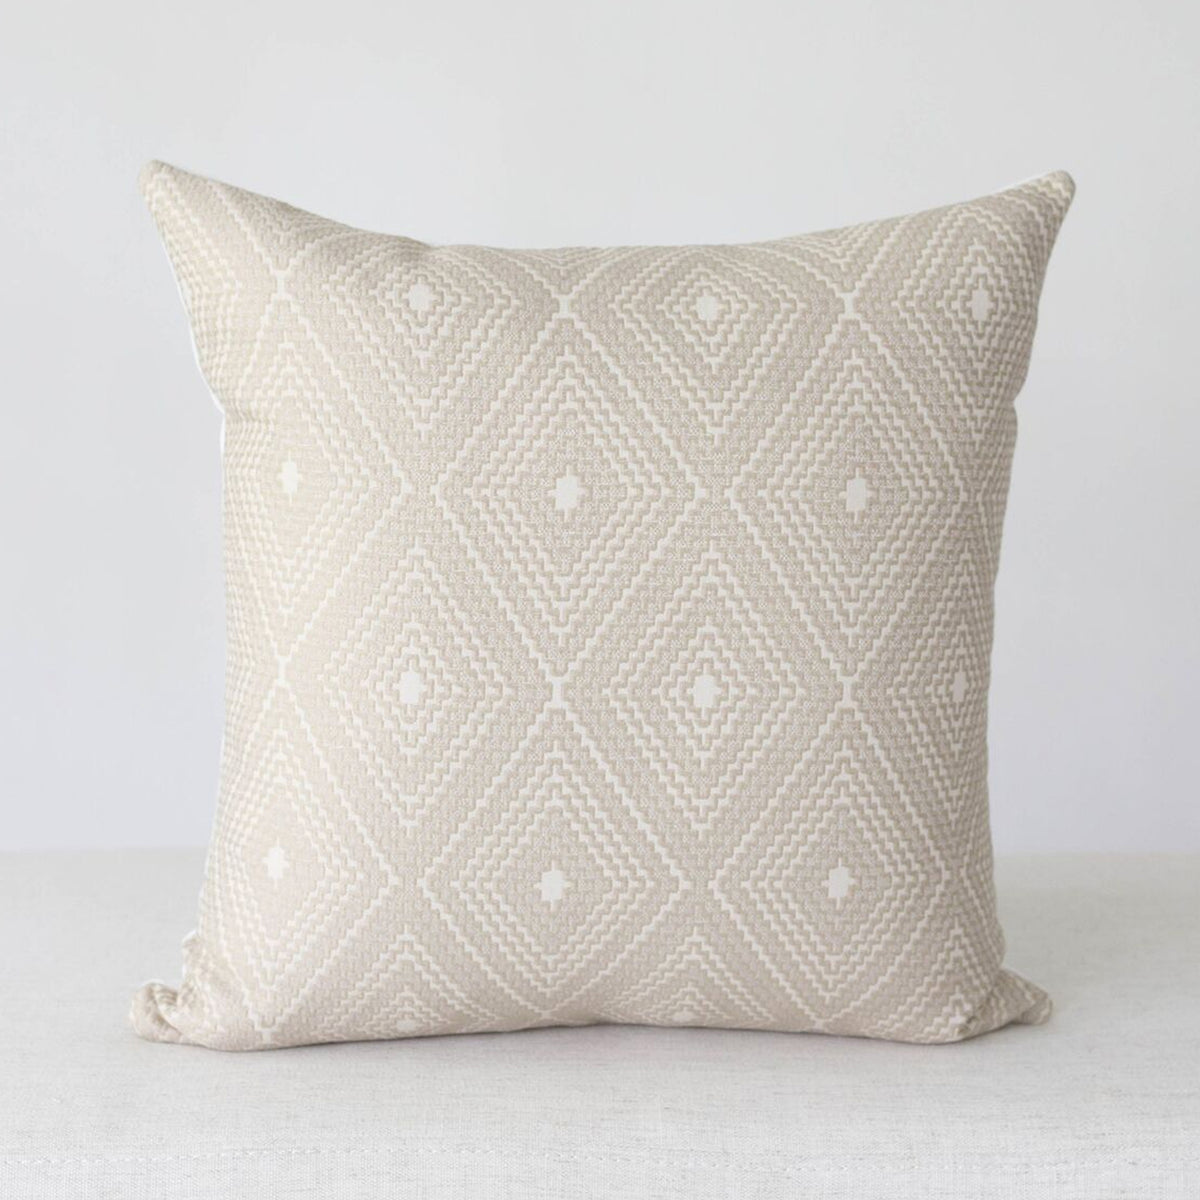 Alyssa Handmade Pillow Cover